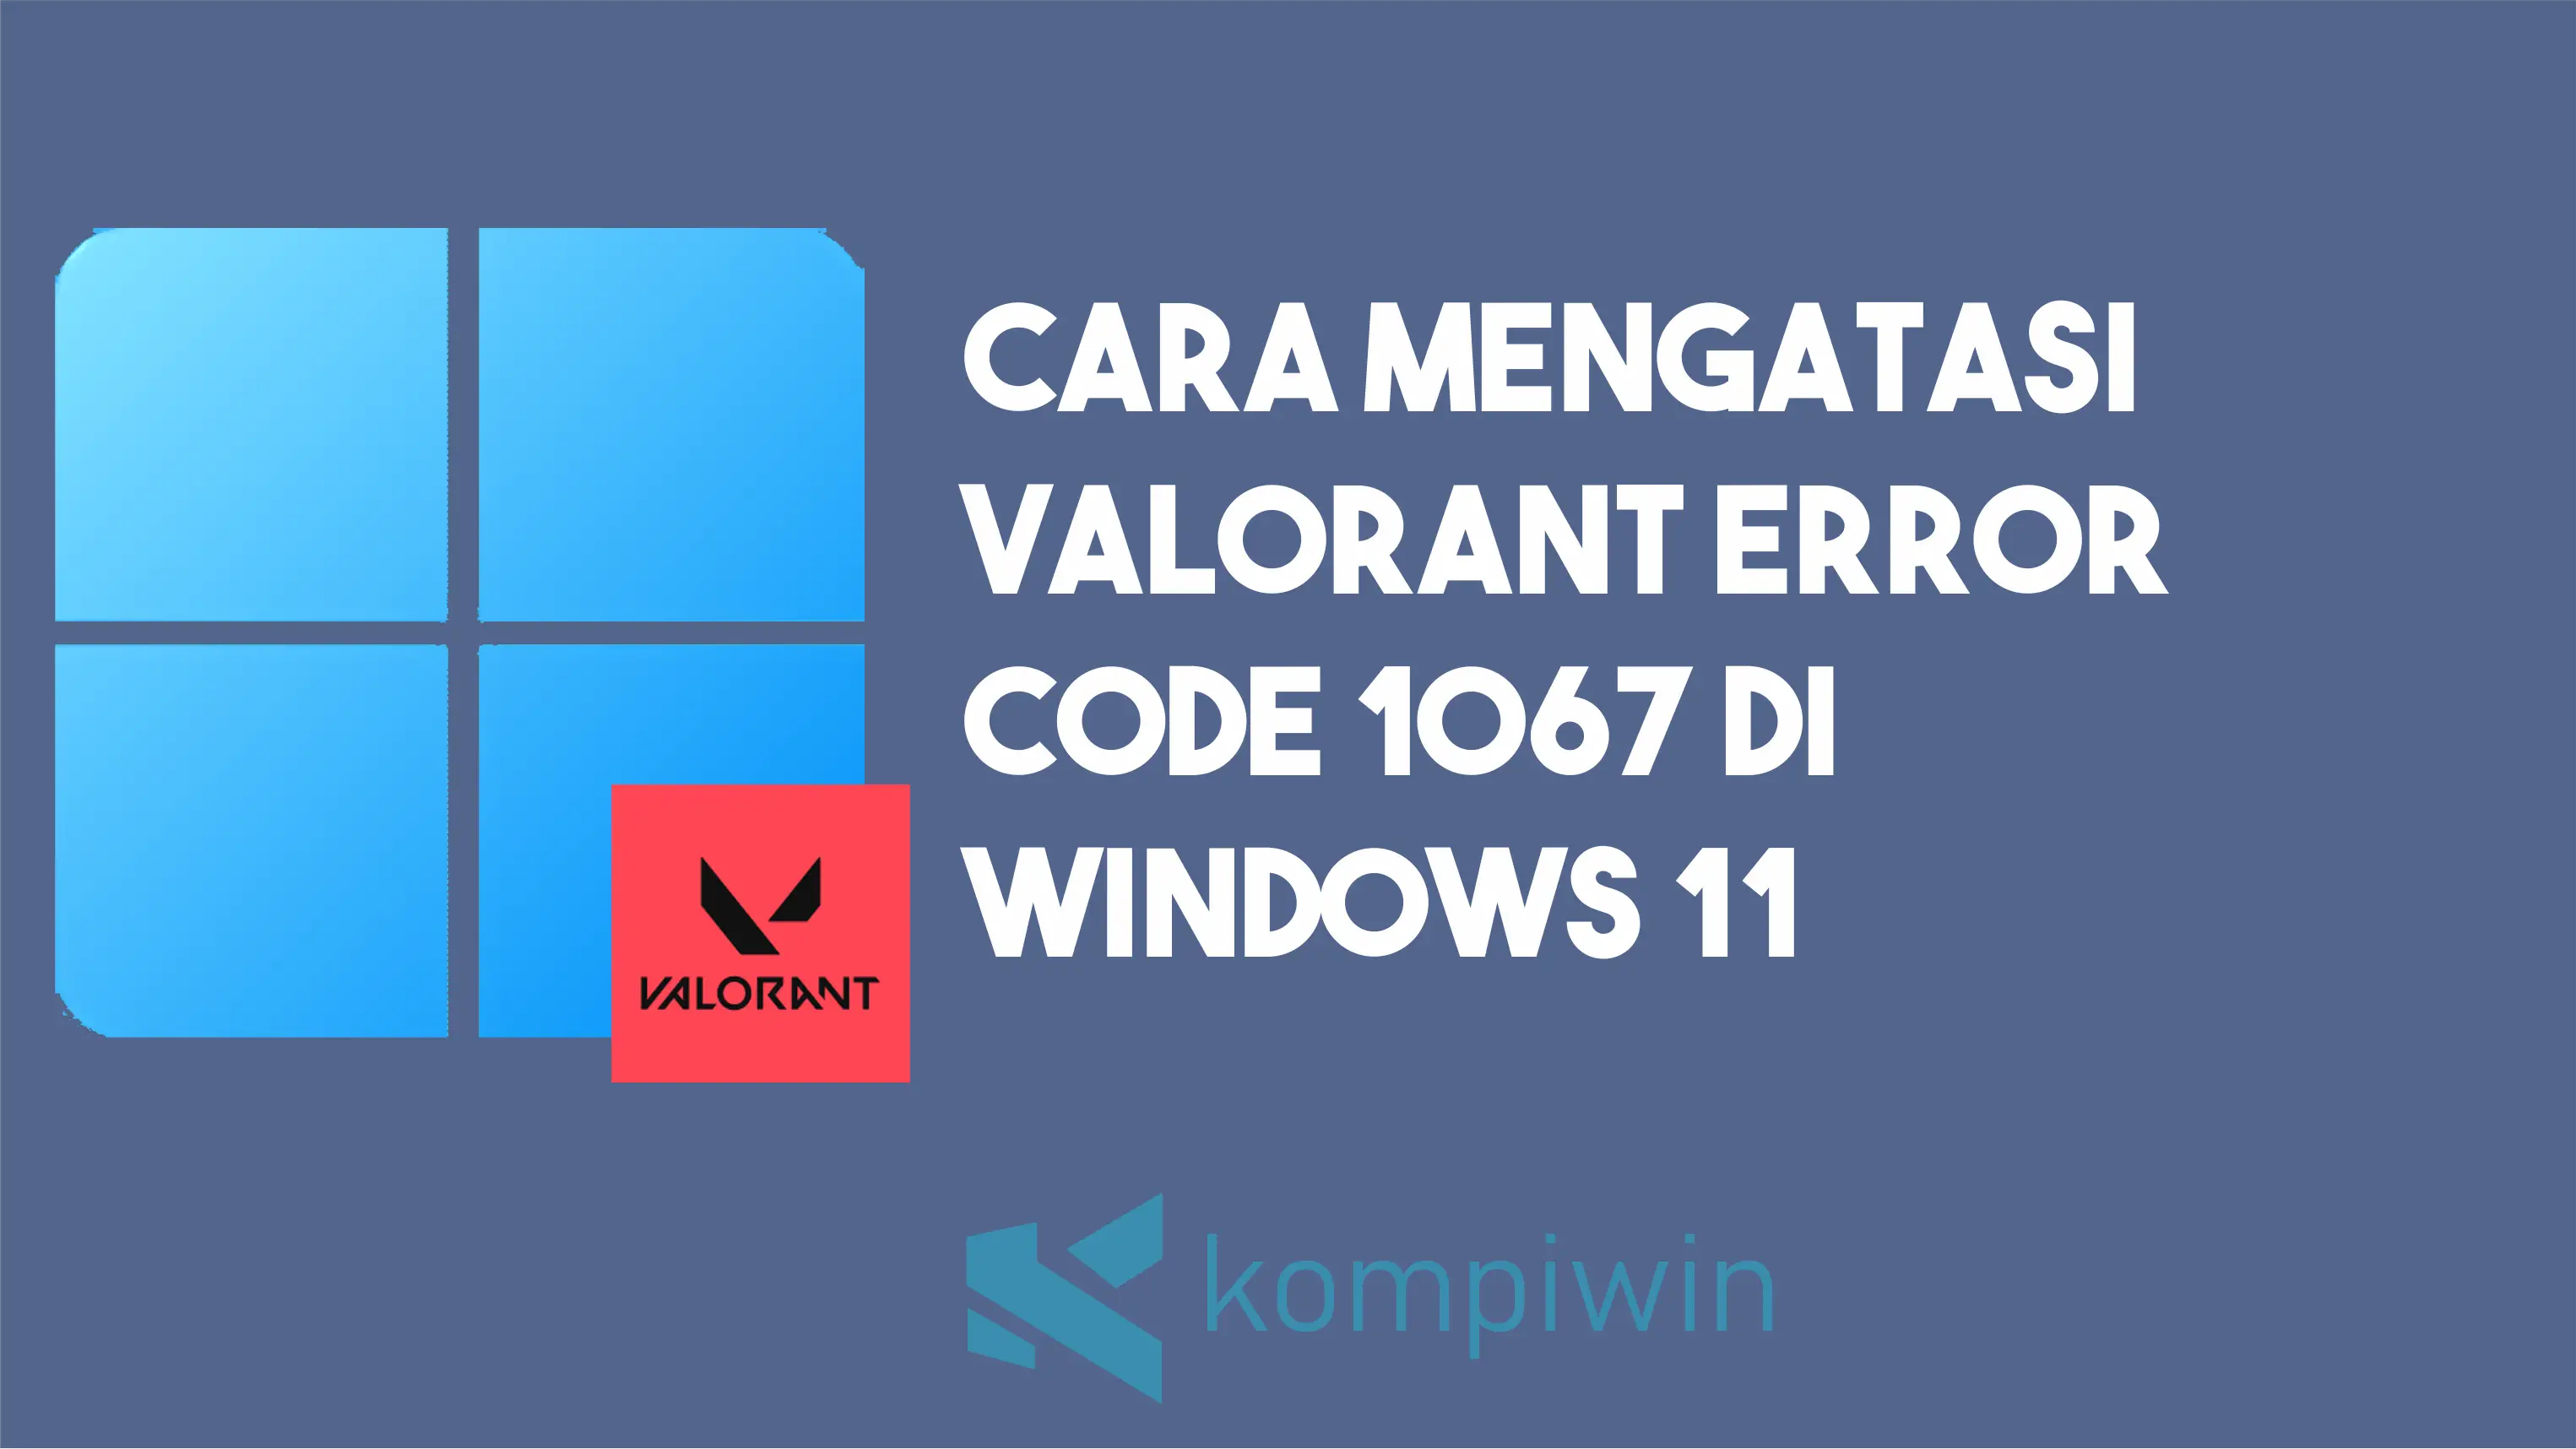 Cara Mengatasi Valorant Error Code 1067 Di Windows 11